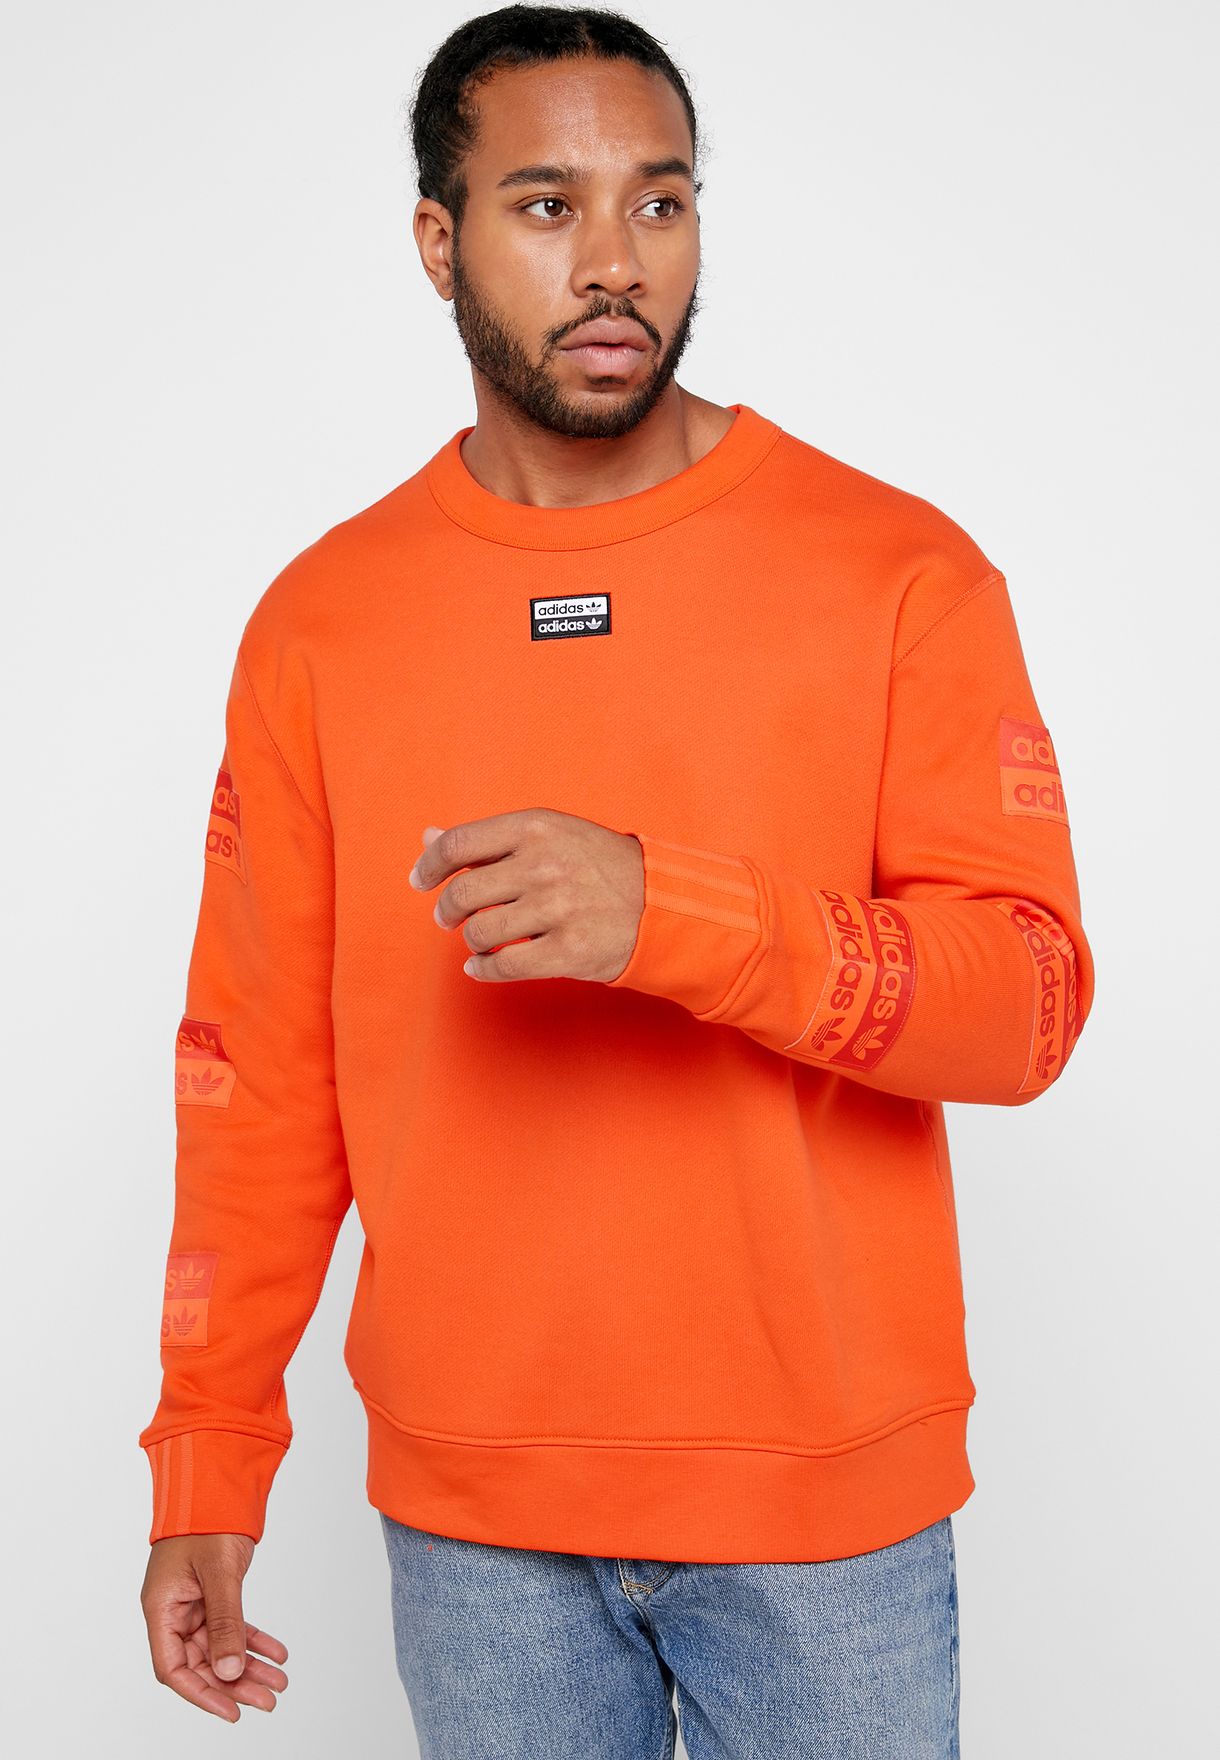 adidas sweatshirt orange